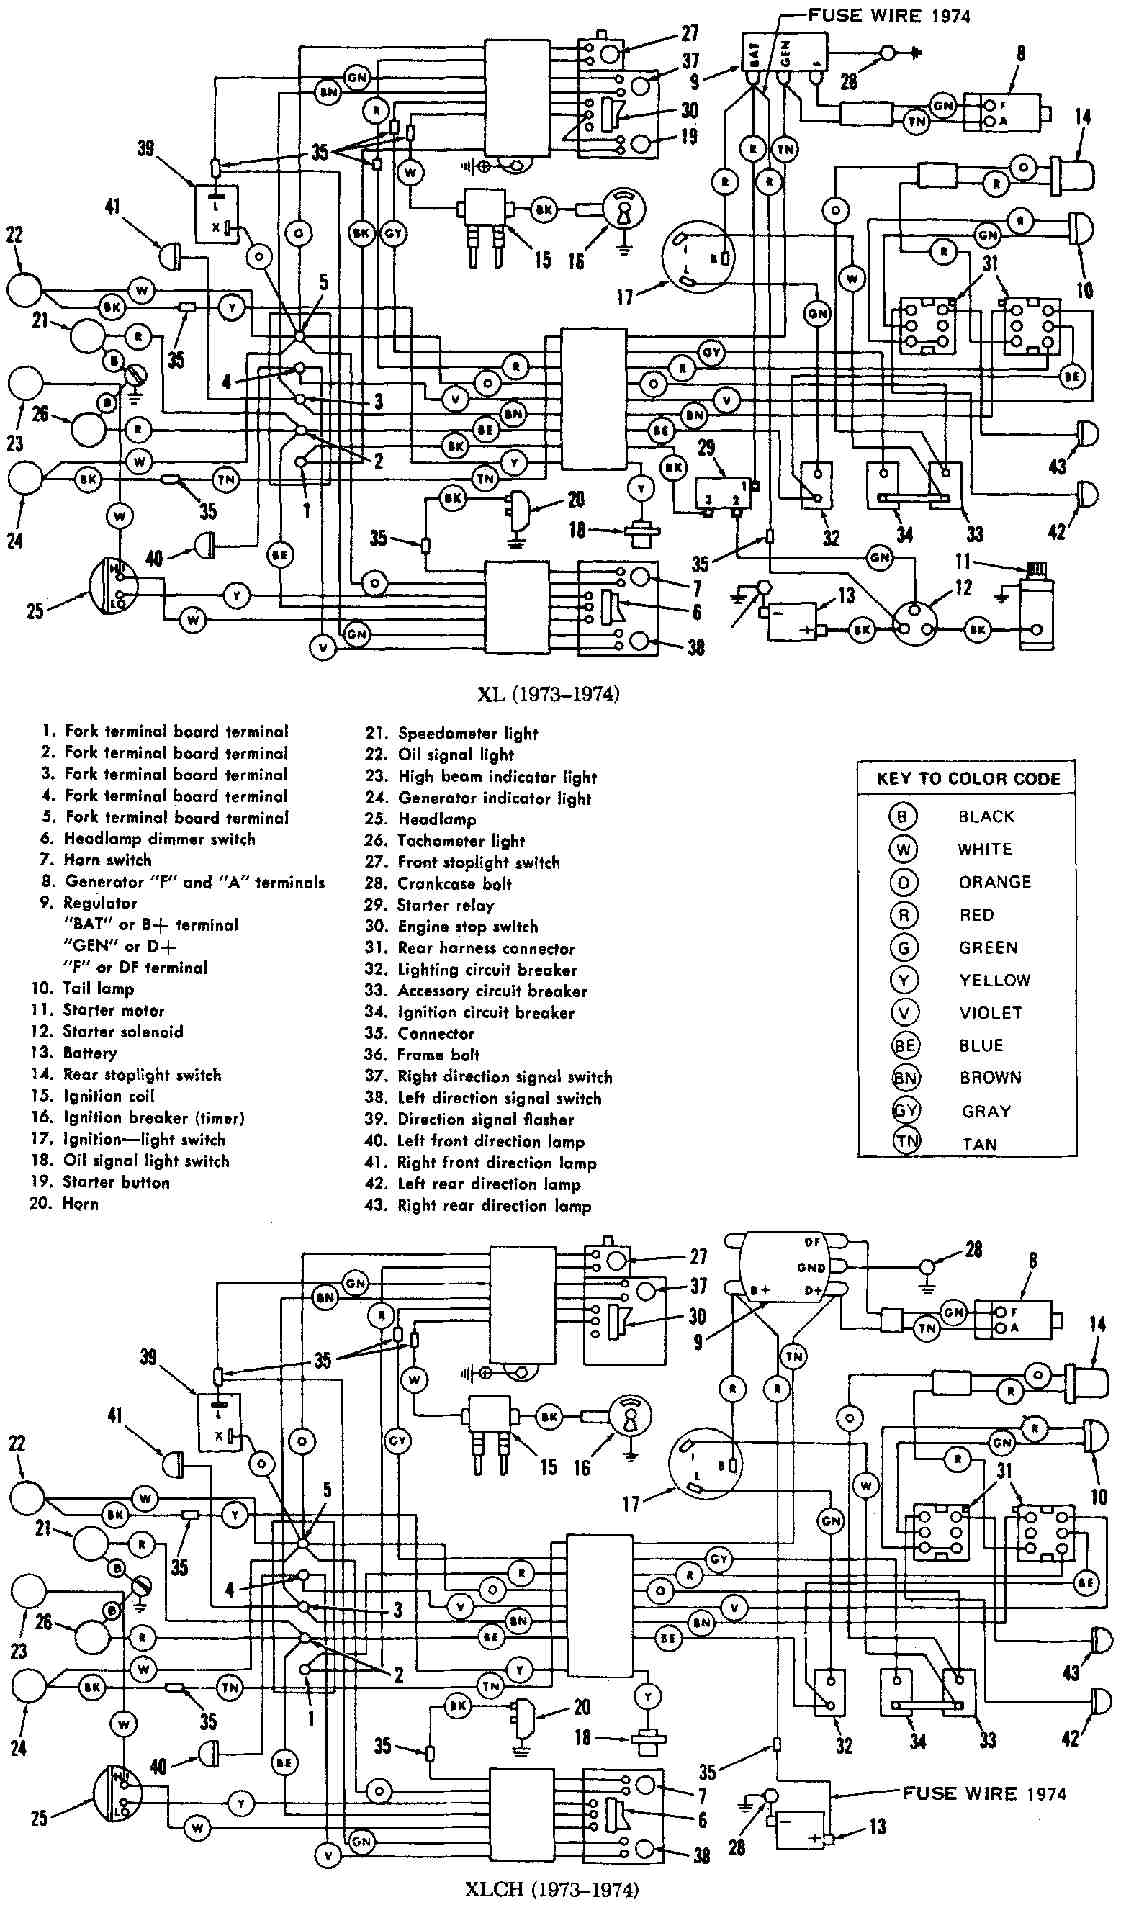 HARLEY DAVIDSON - Motorcycles Manual PDF, Wiring Diagram & Fault Codes